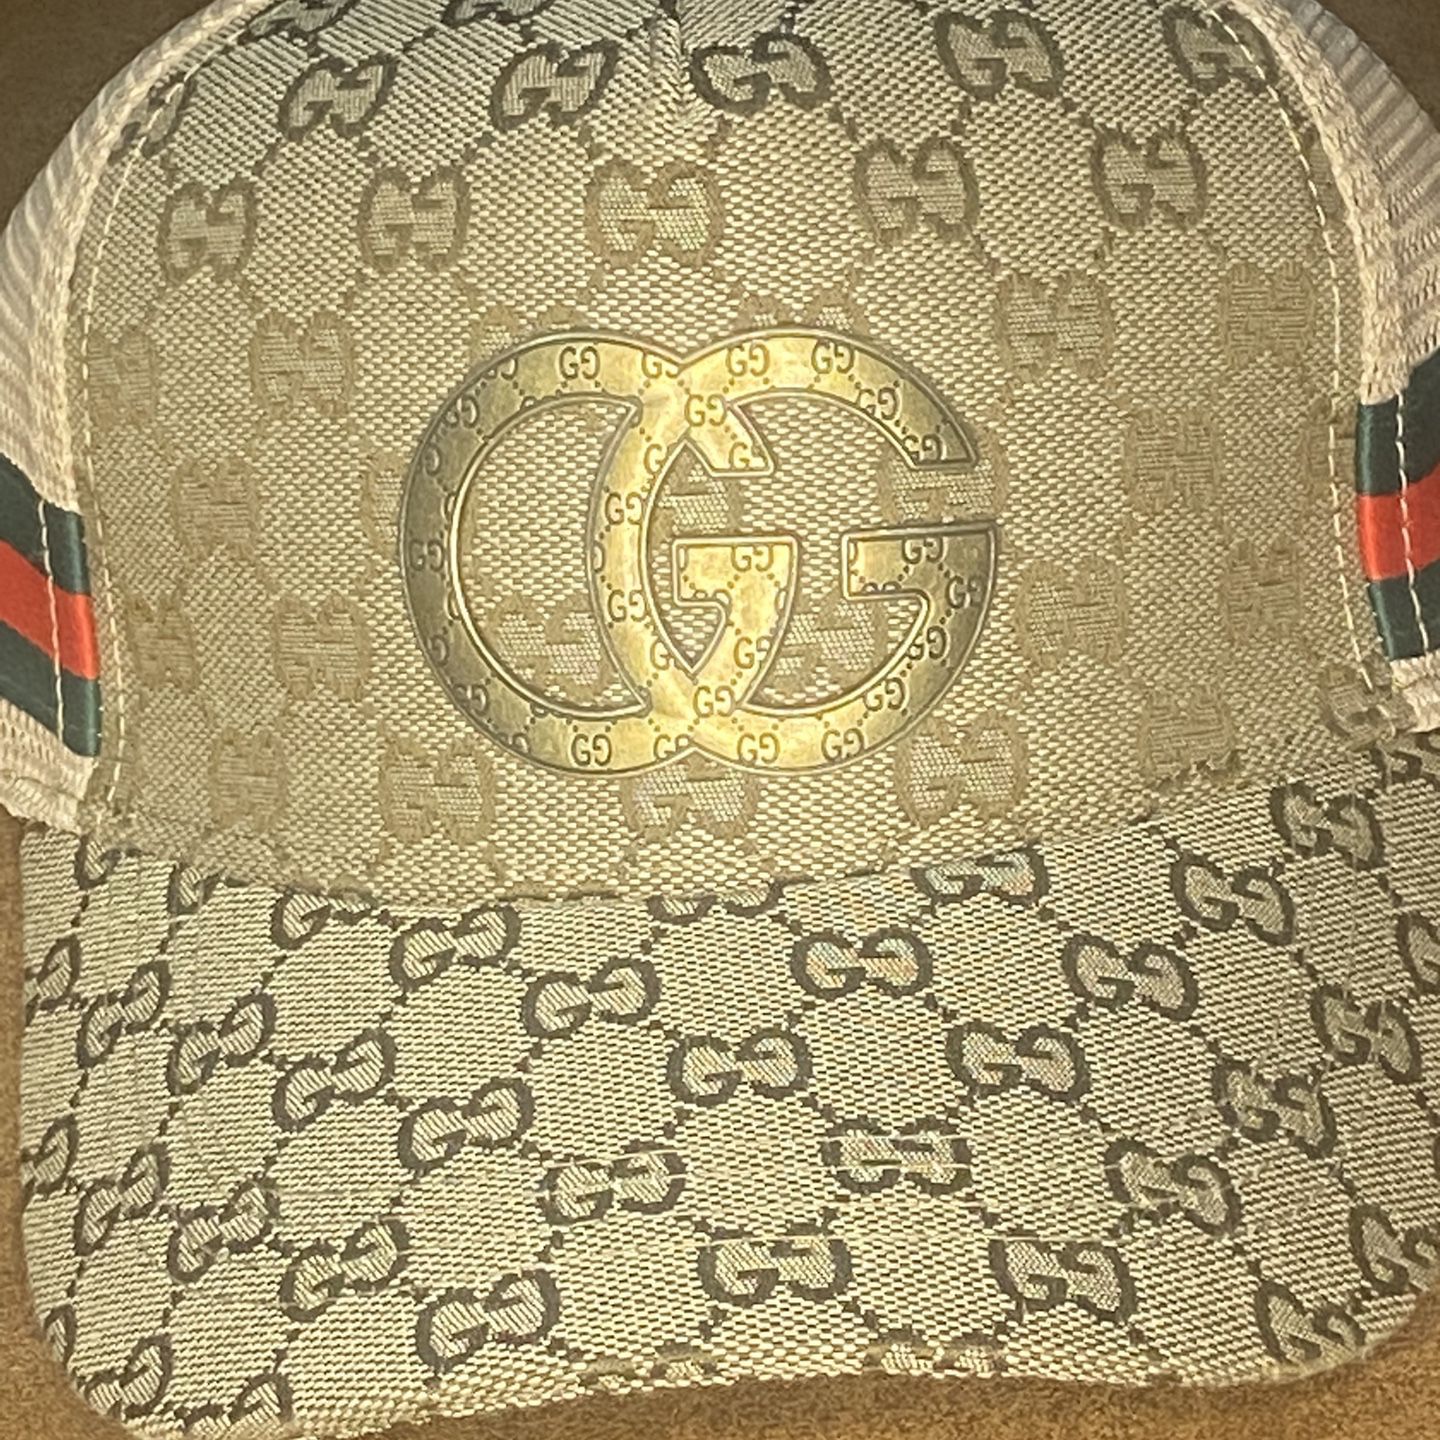 Gucci Baseball Cap With Web